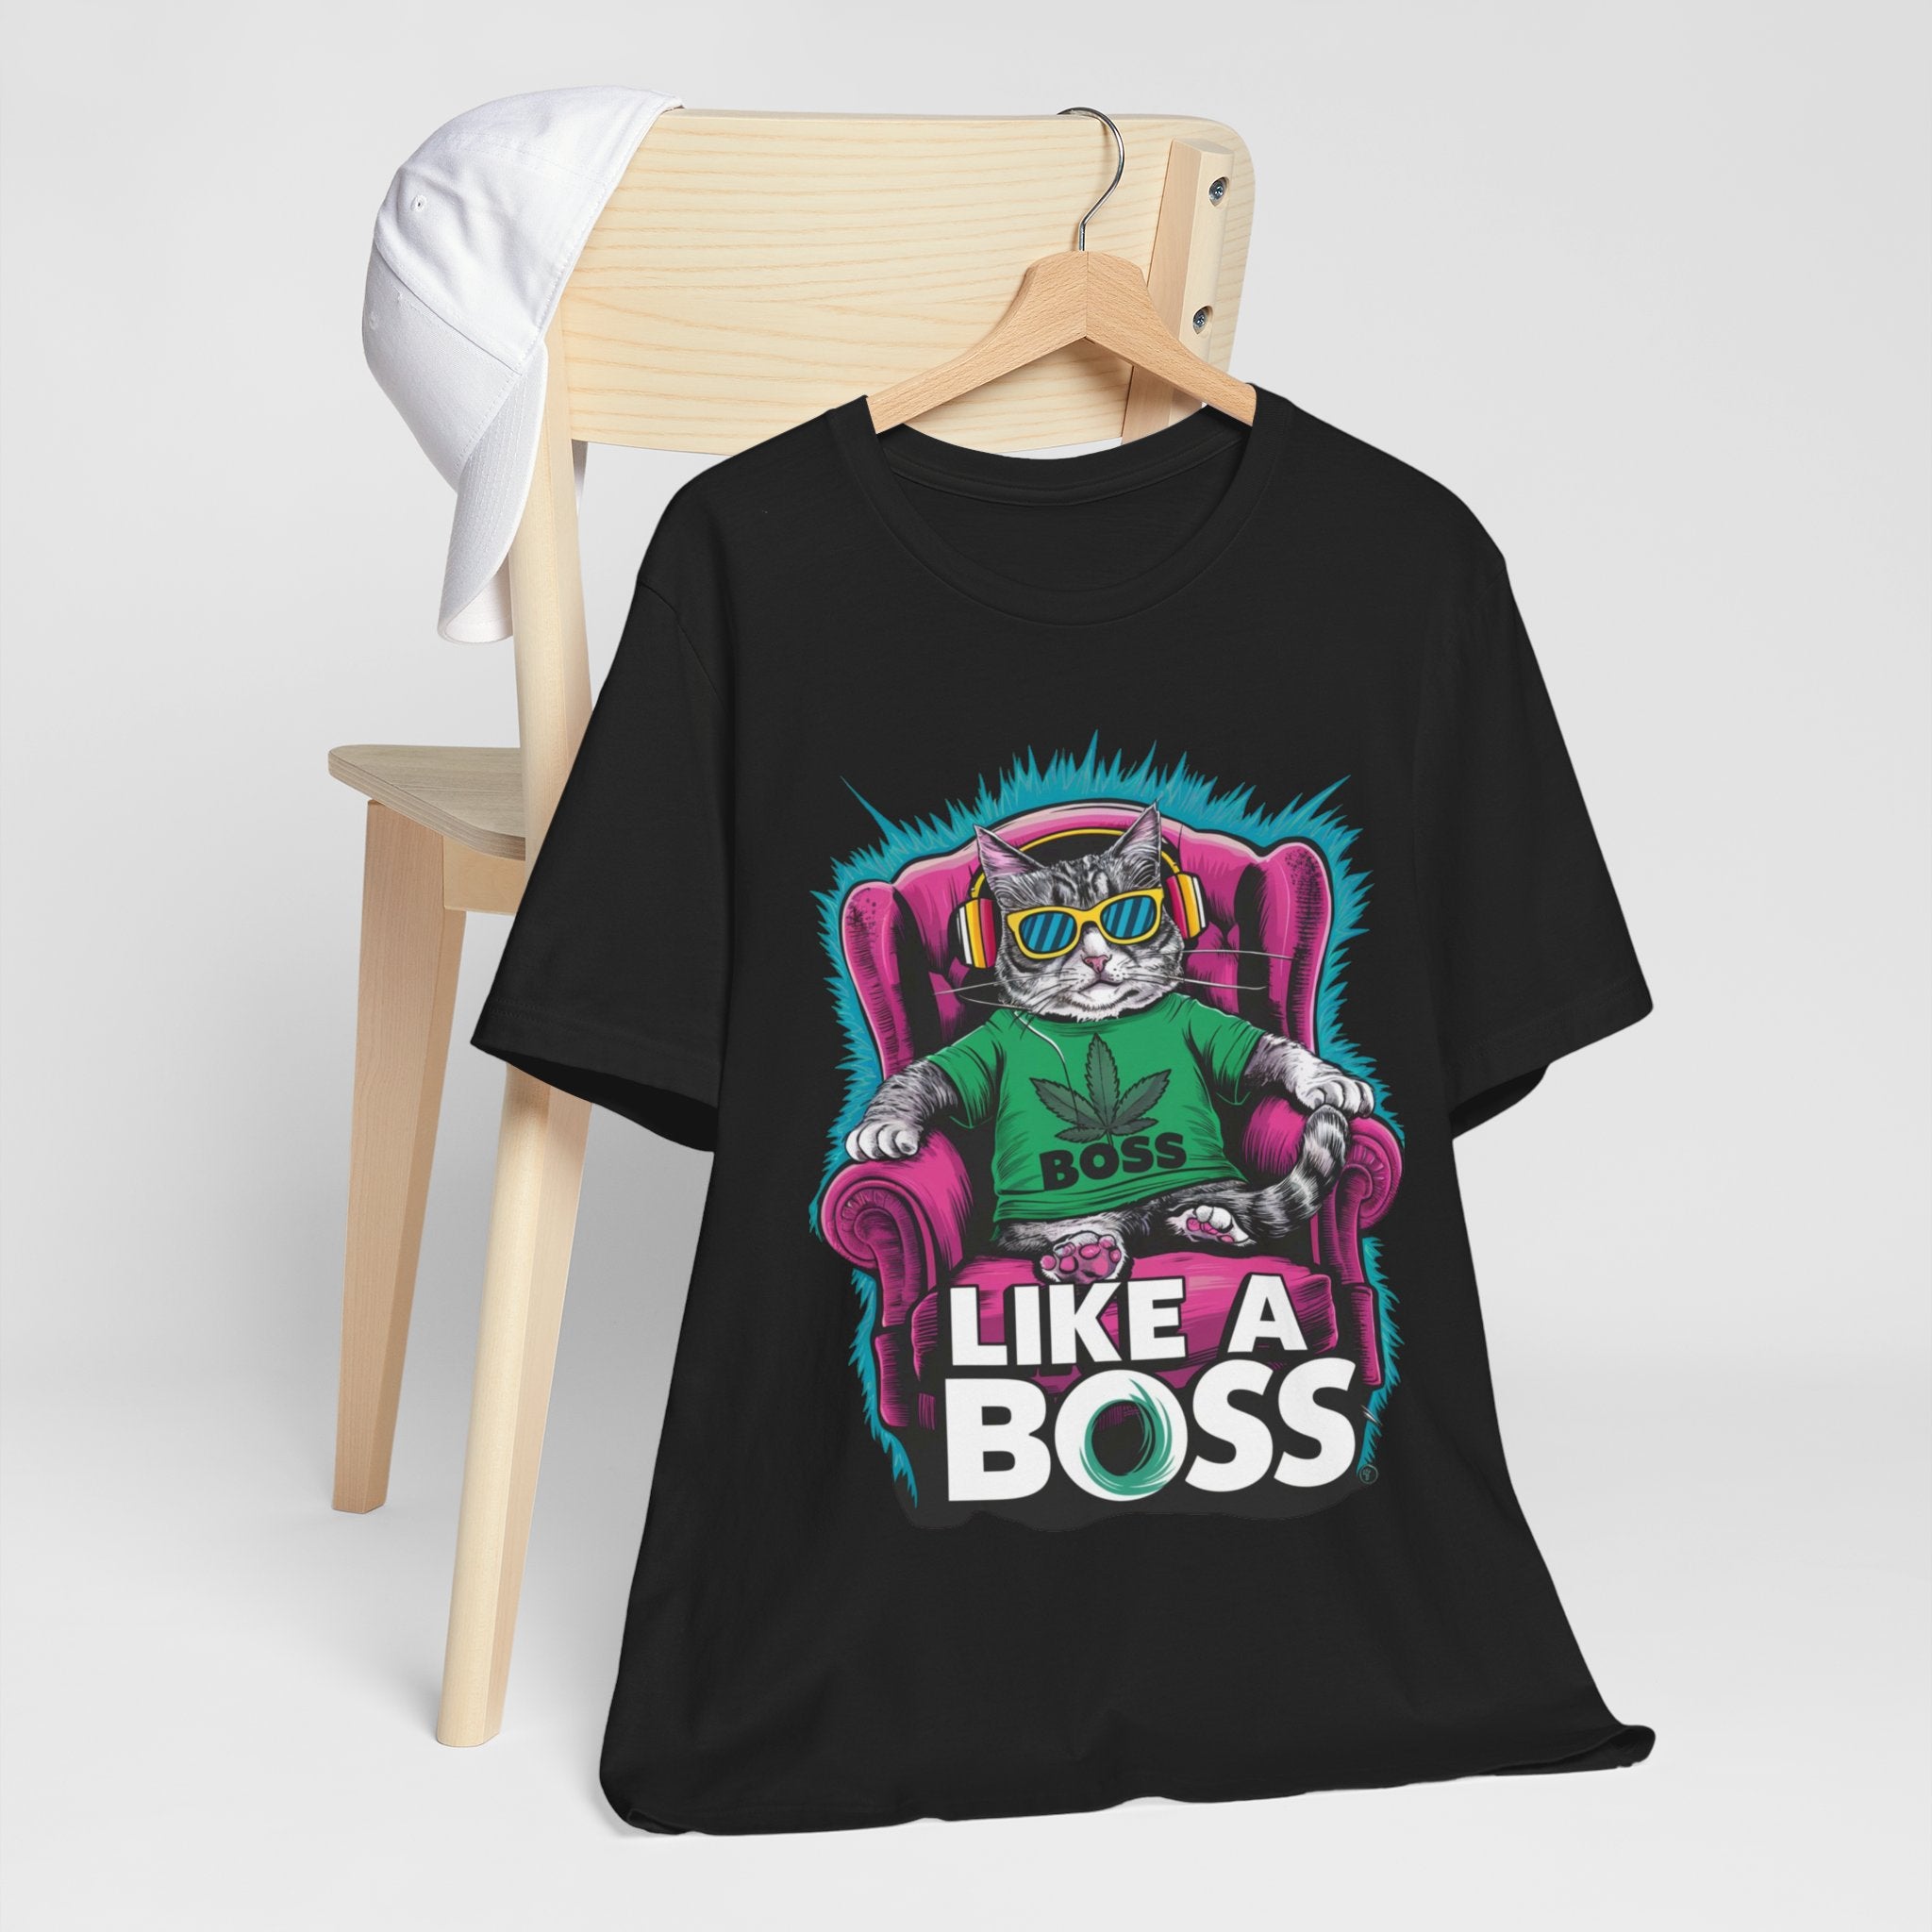 Like a Boss Tee Shirt